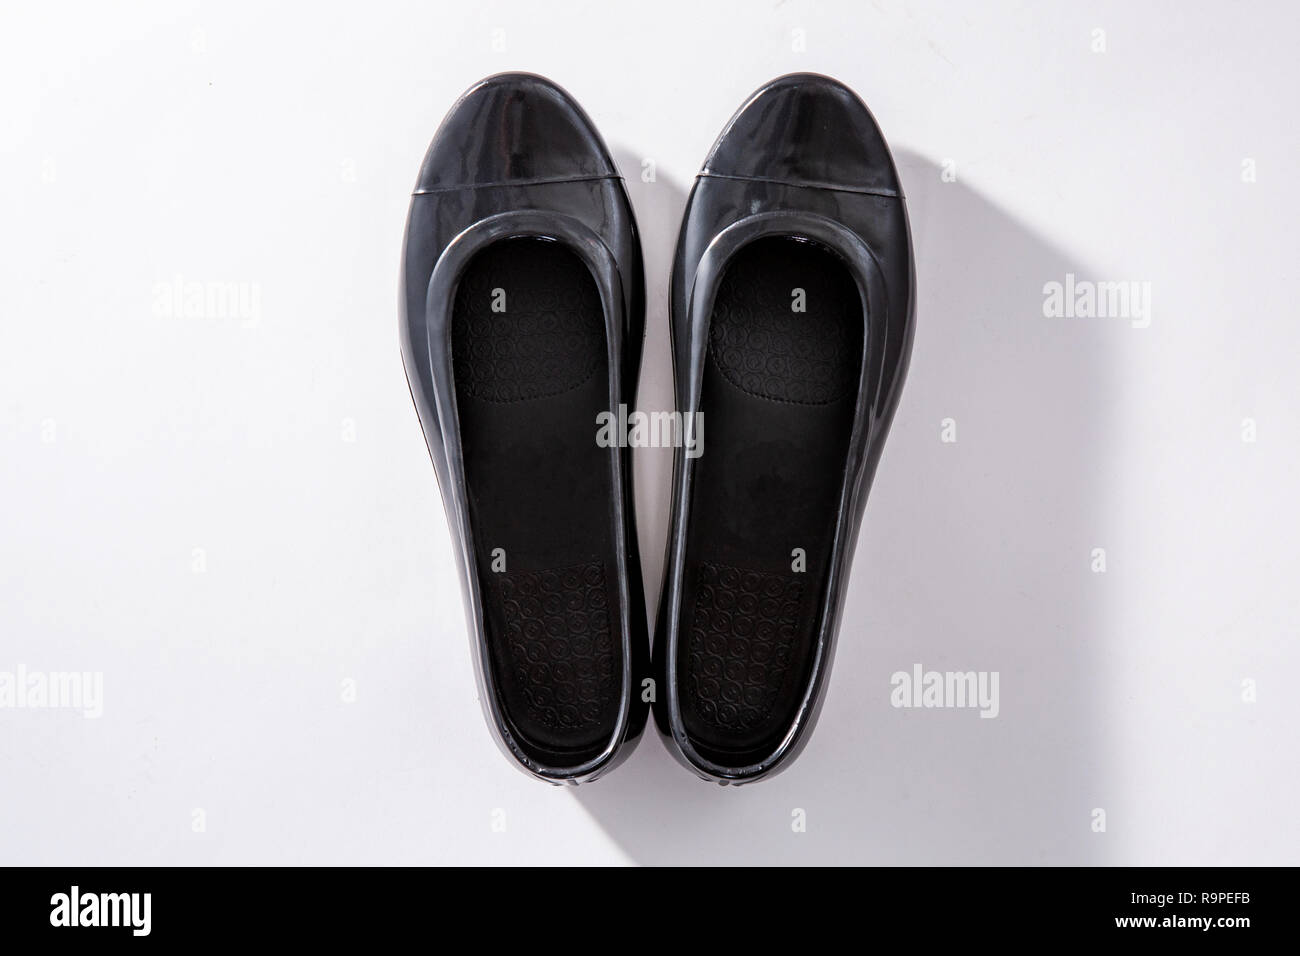 black rubber shoes for ladies